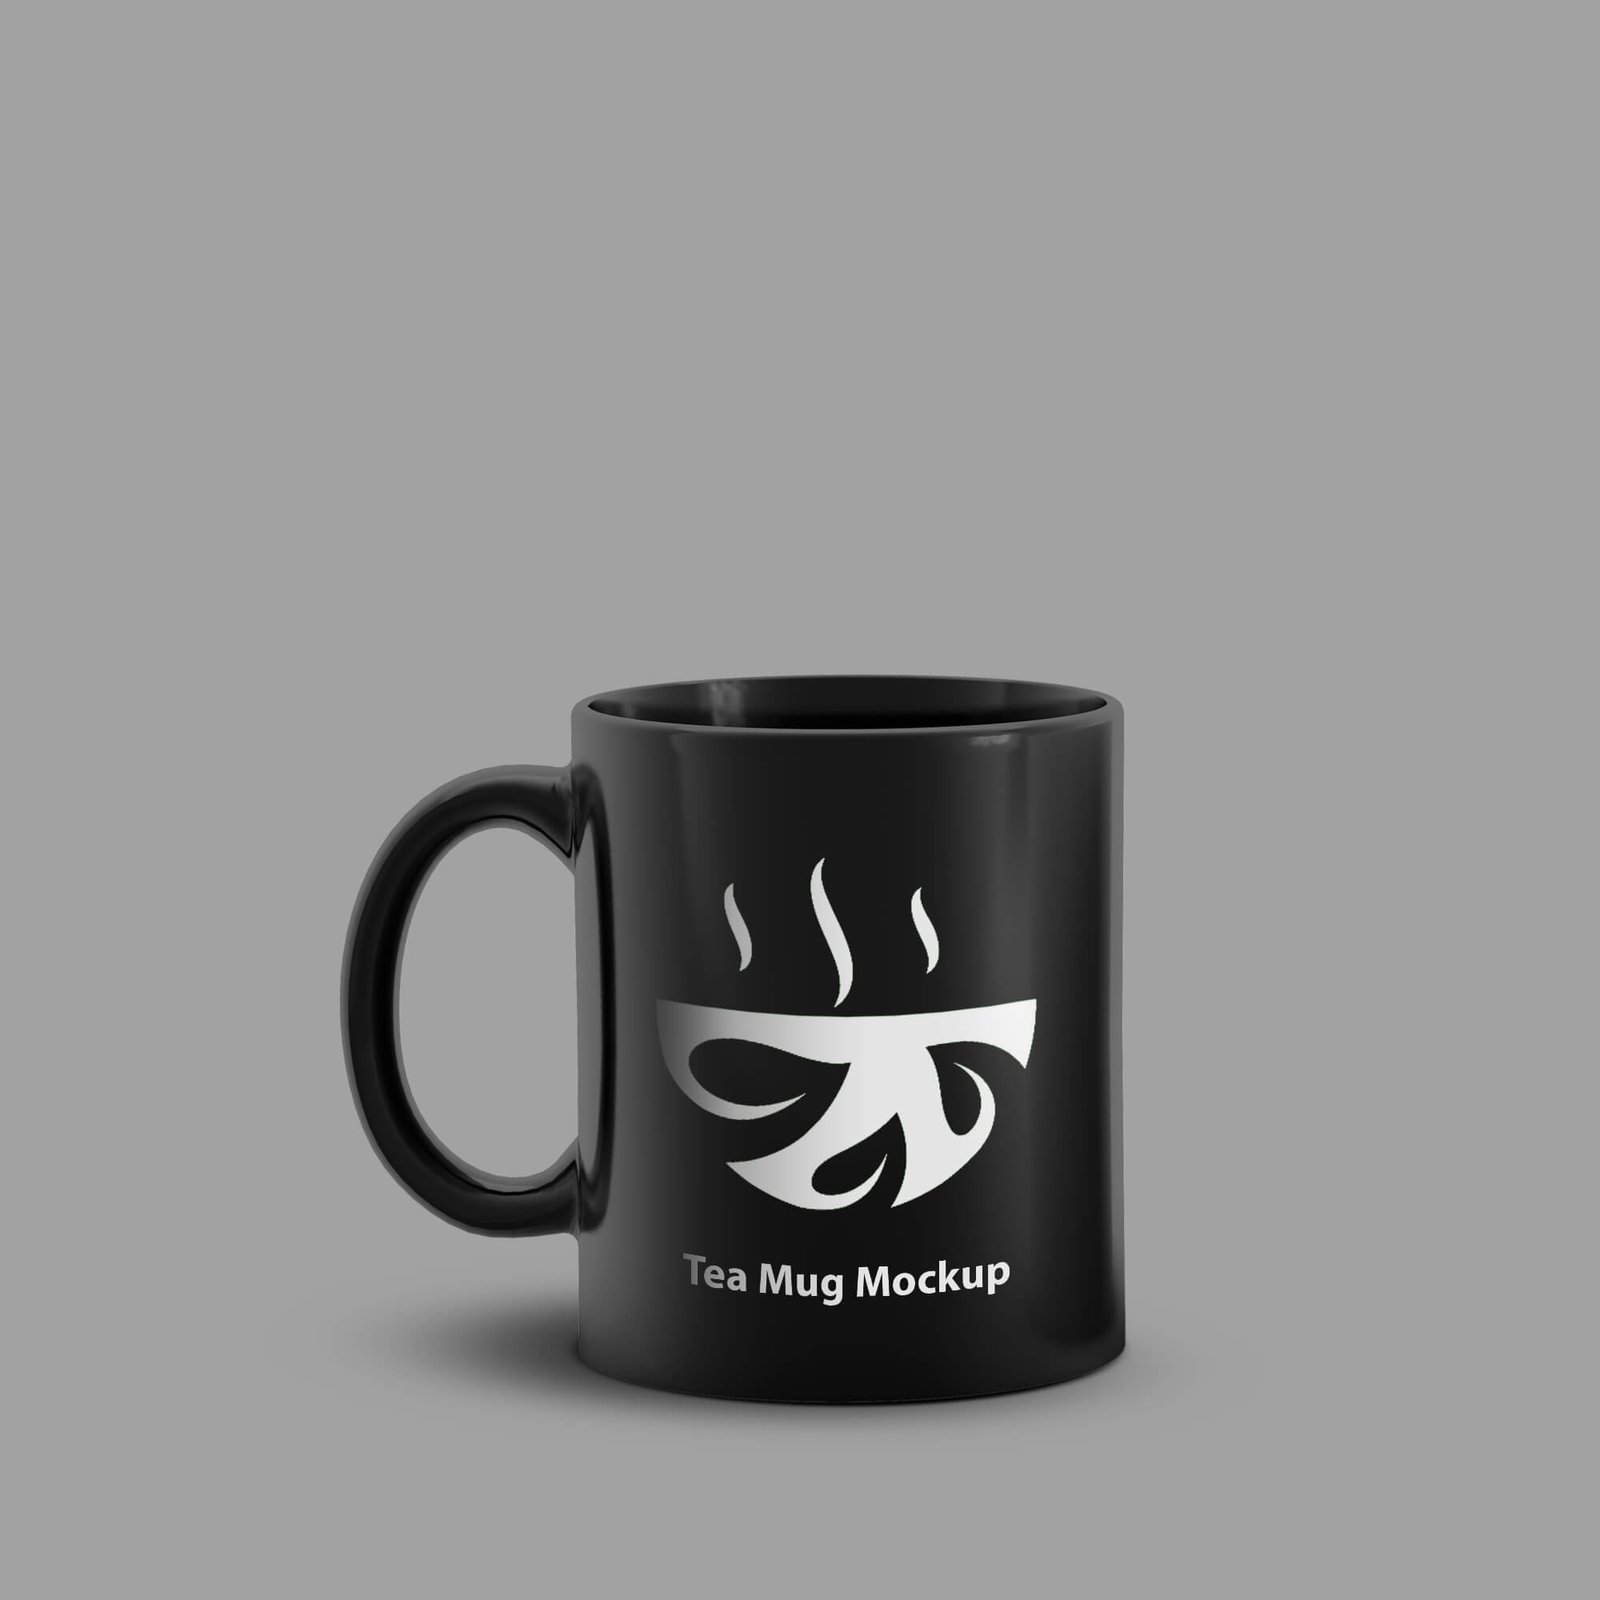 Design Free Tea Mug Mockup PSD Template